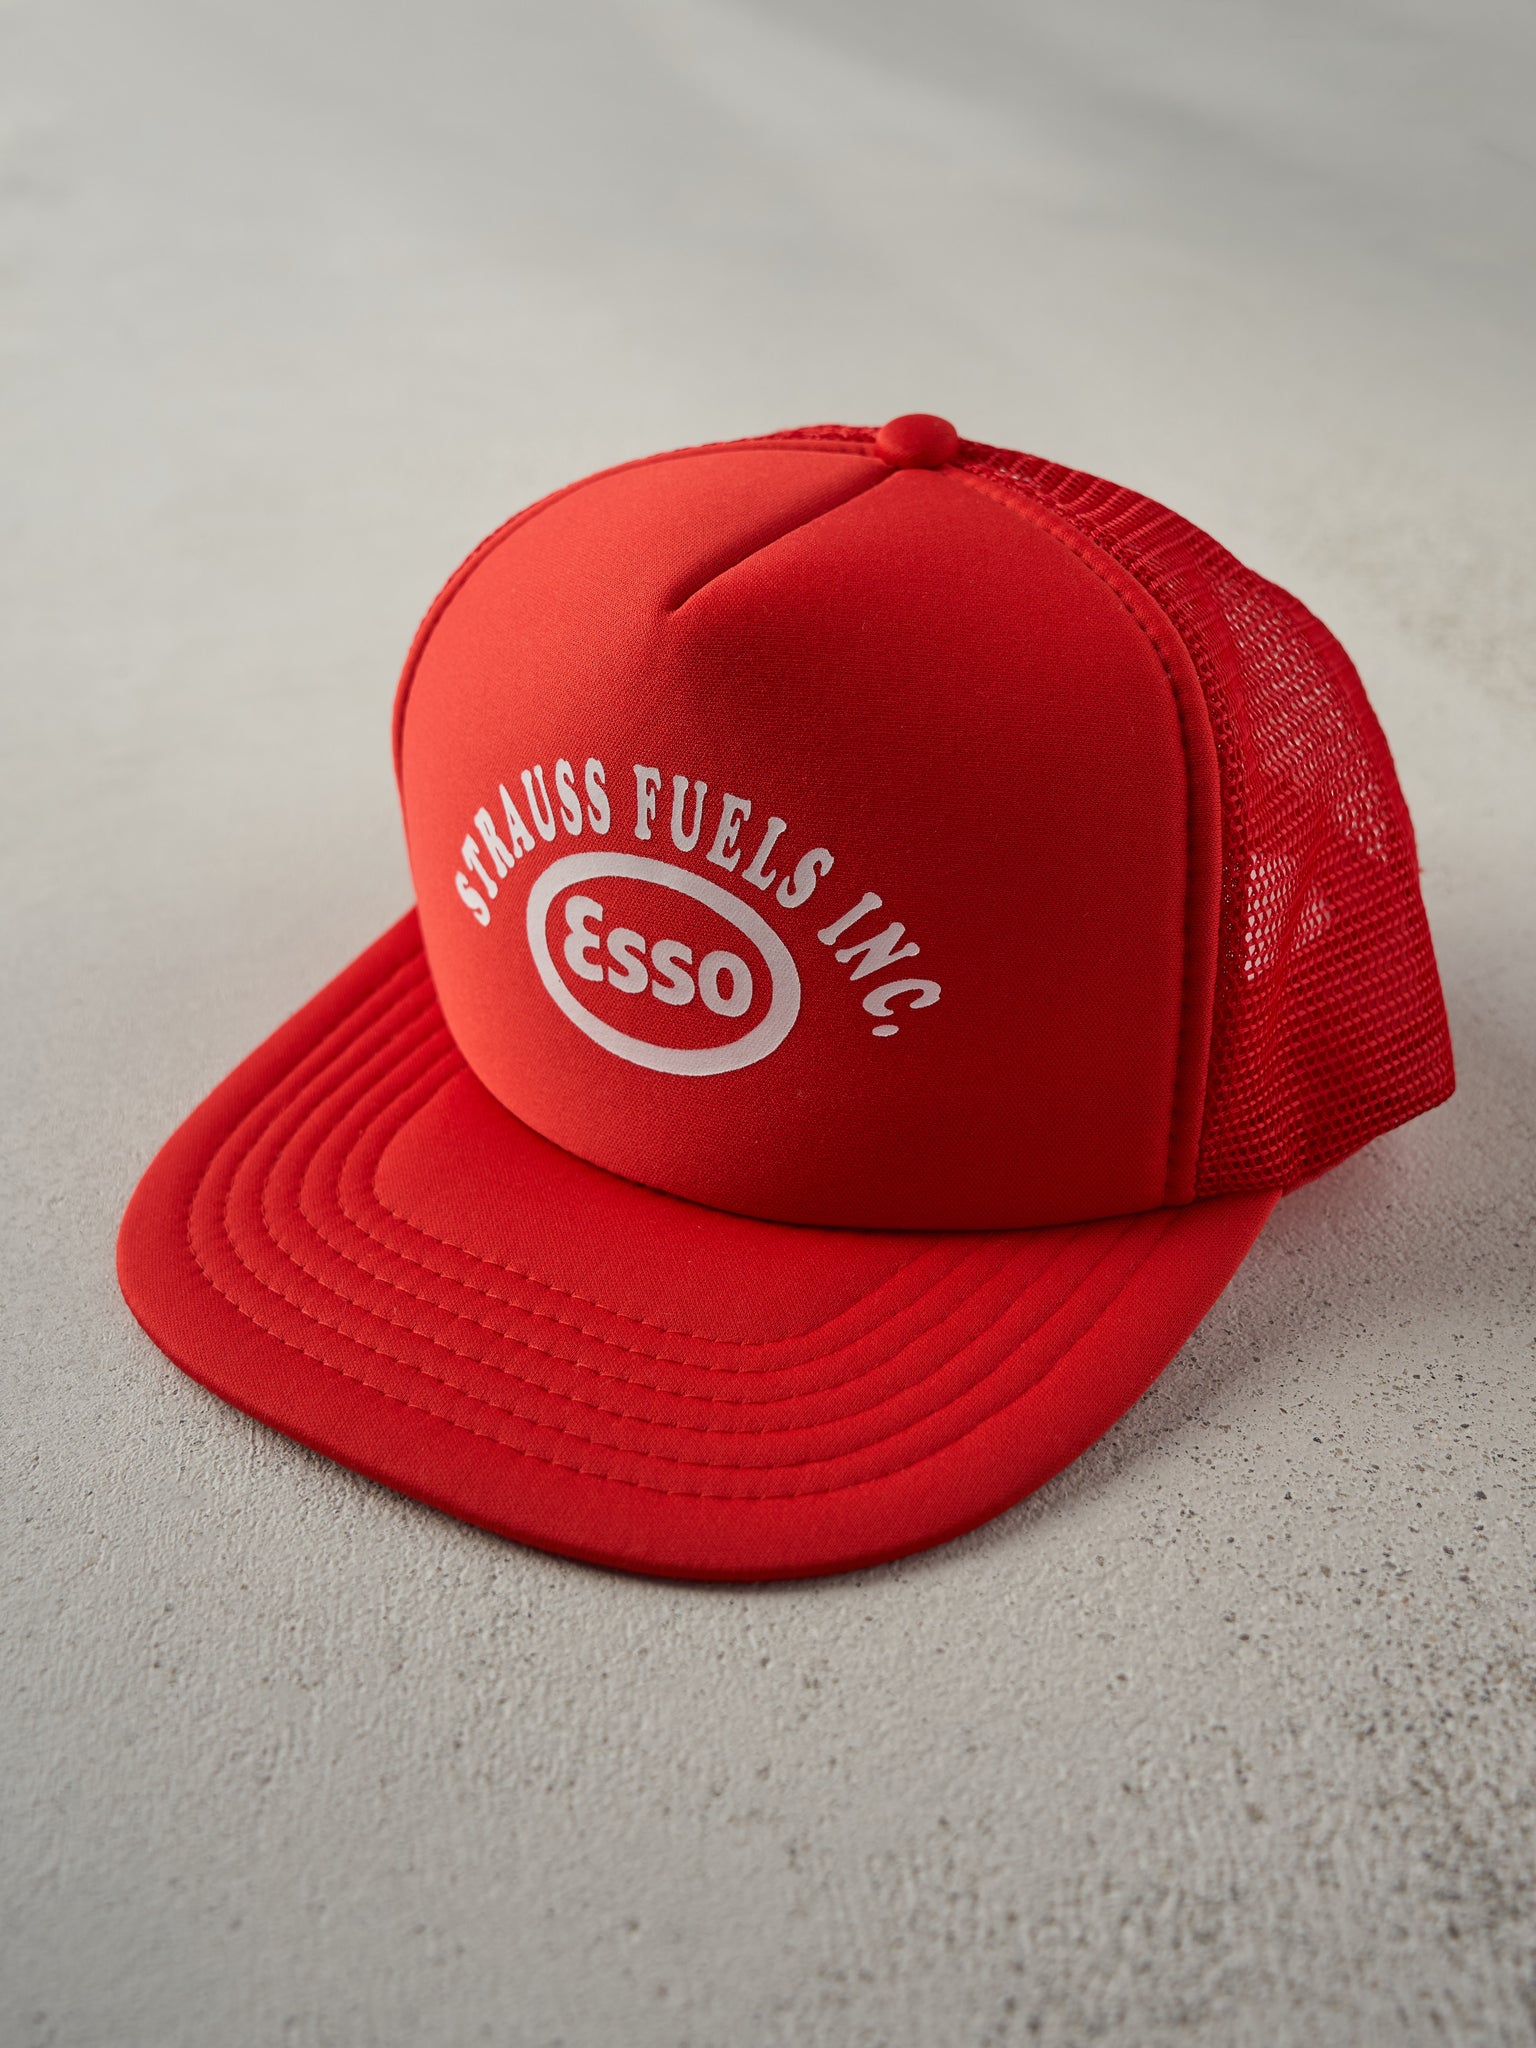 Vintage 90s Red Esso Fuel Foam Trucker Hat